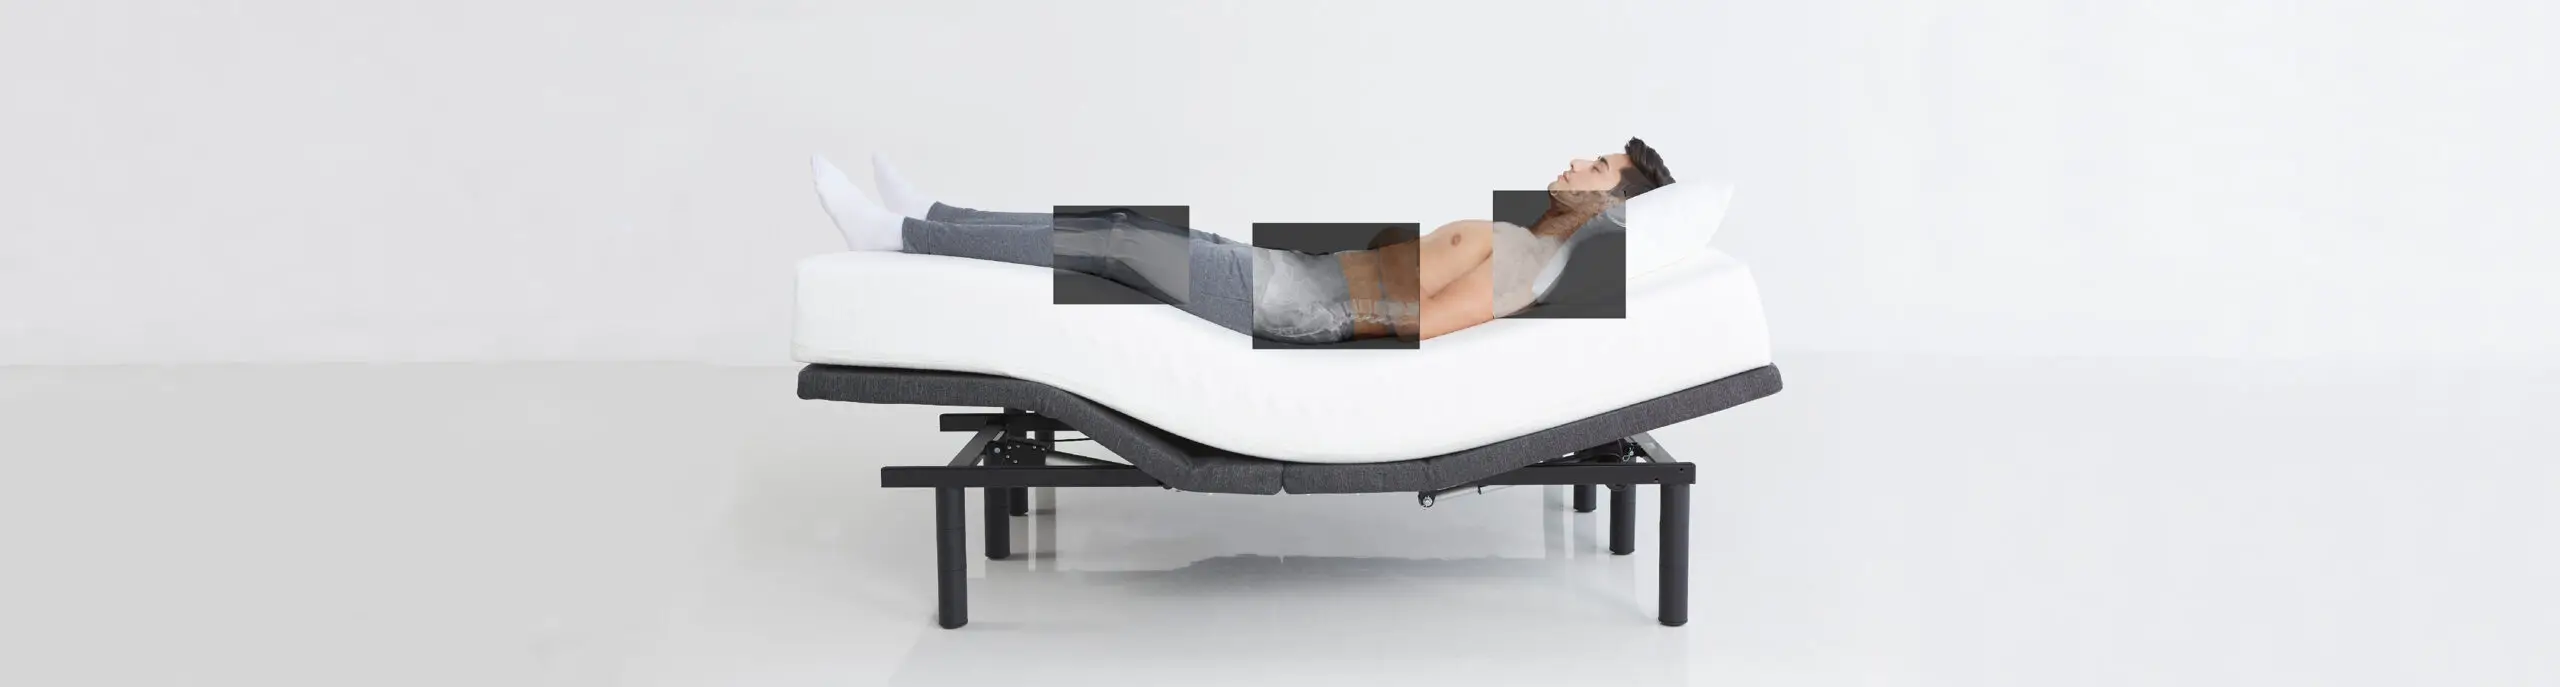 Adjustable-bed